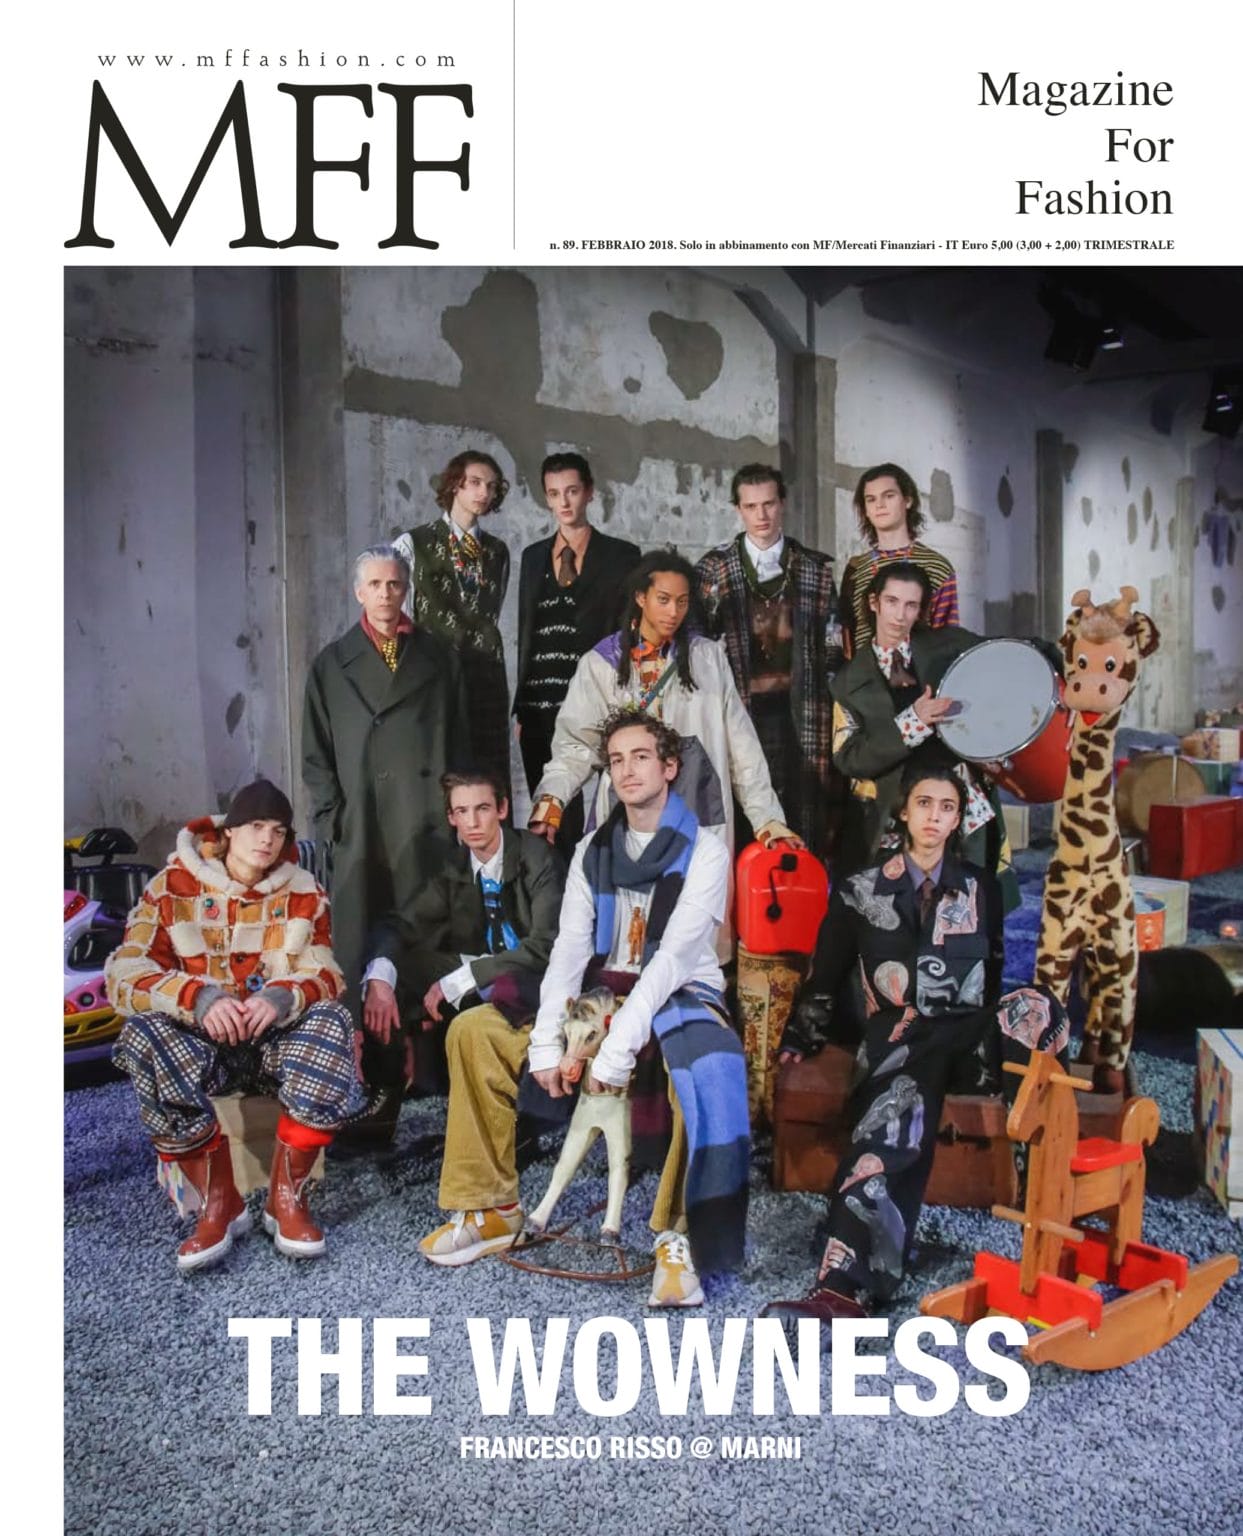 Marni Fashion Editorial Shooting, Cover Story for MFFashion. Collection designed by Francesco Risso Photo by Valerio Mezzanotti